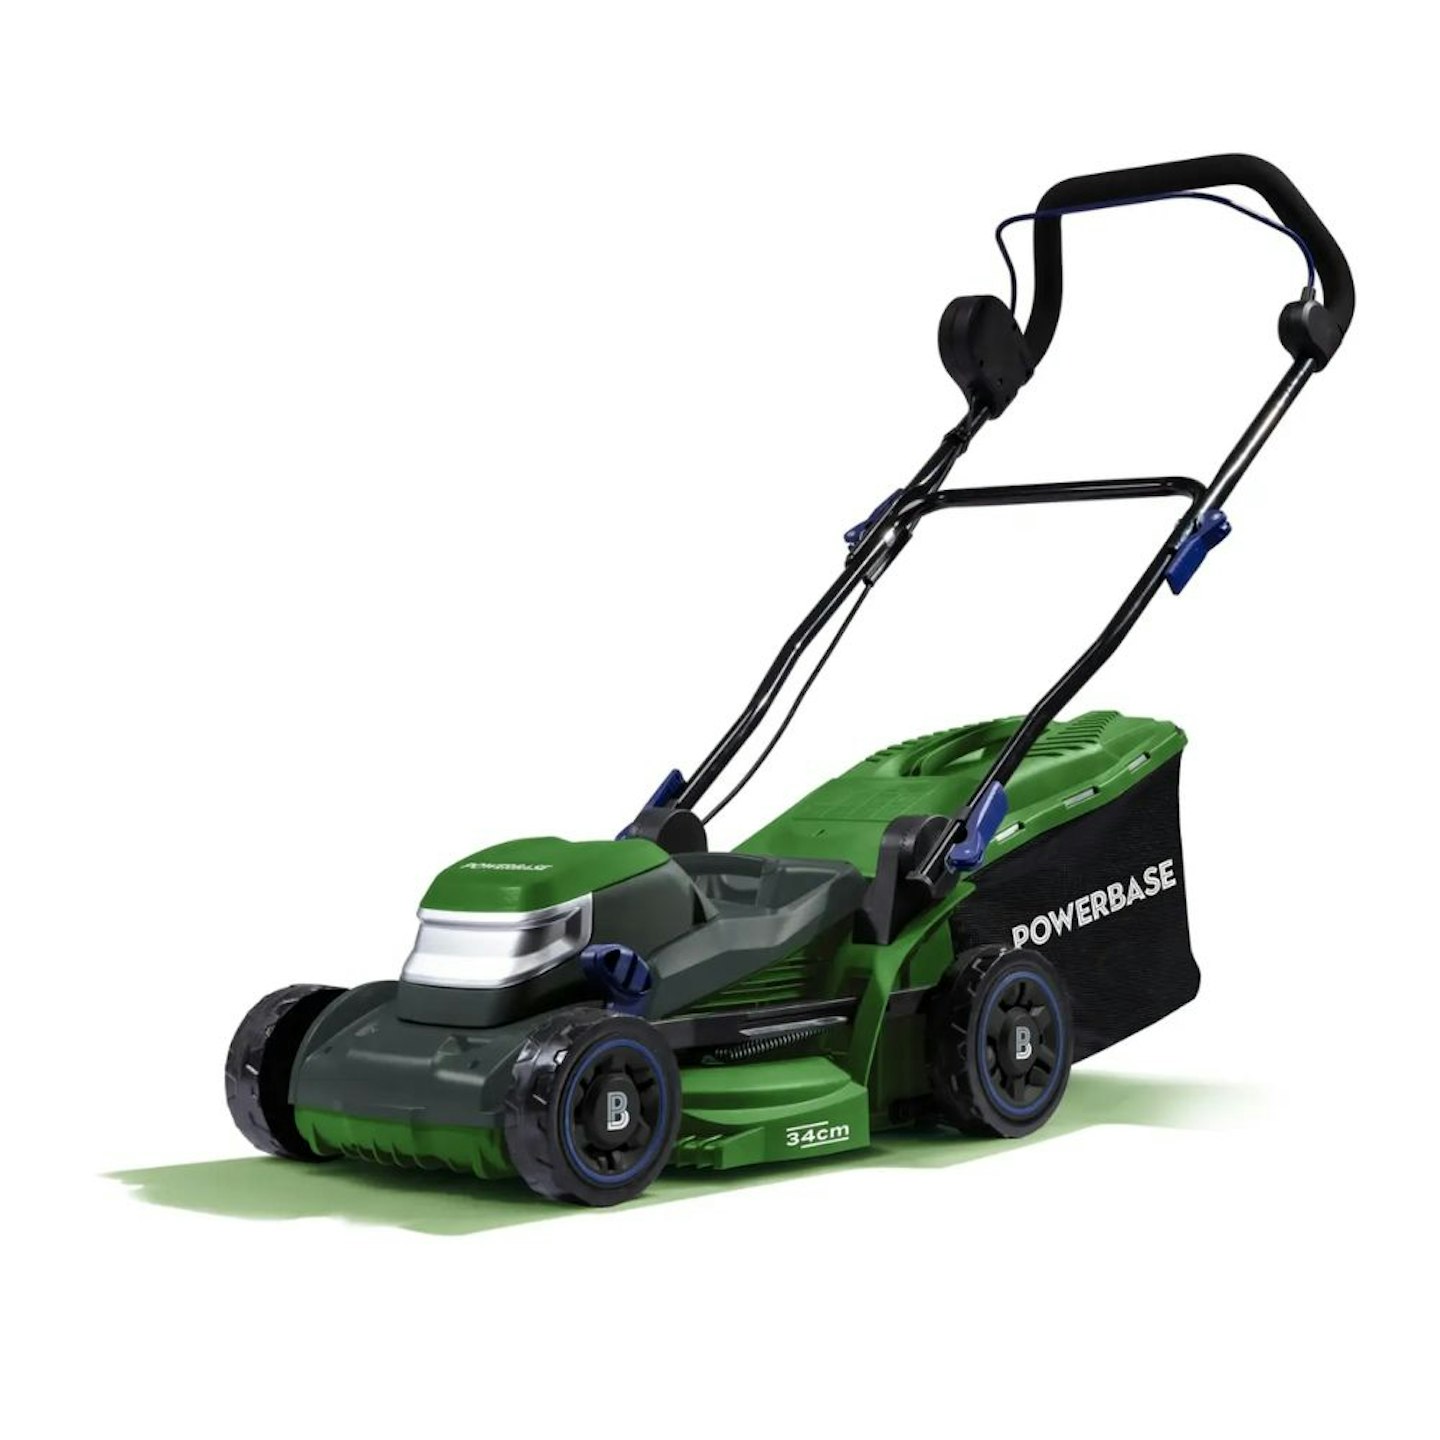 Powerbase 34cm 40V Cordless Lawn Mower